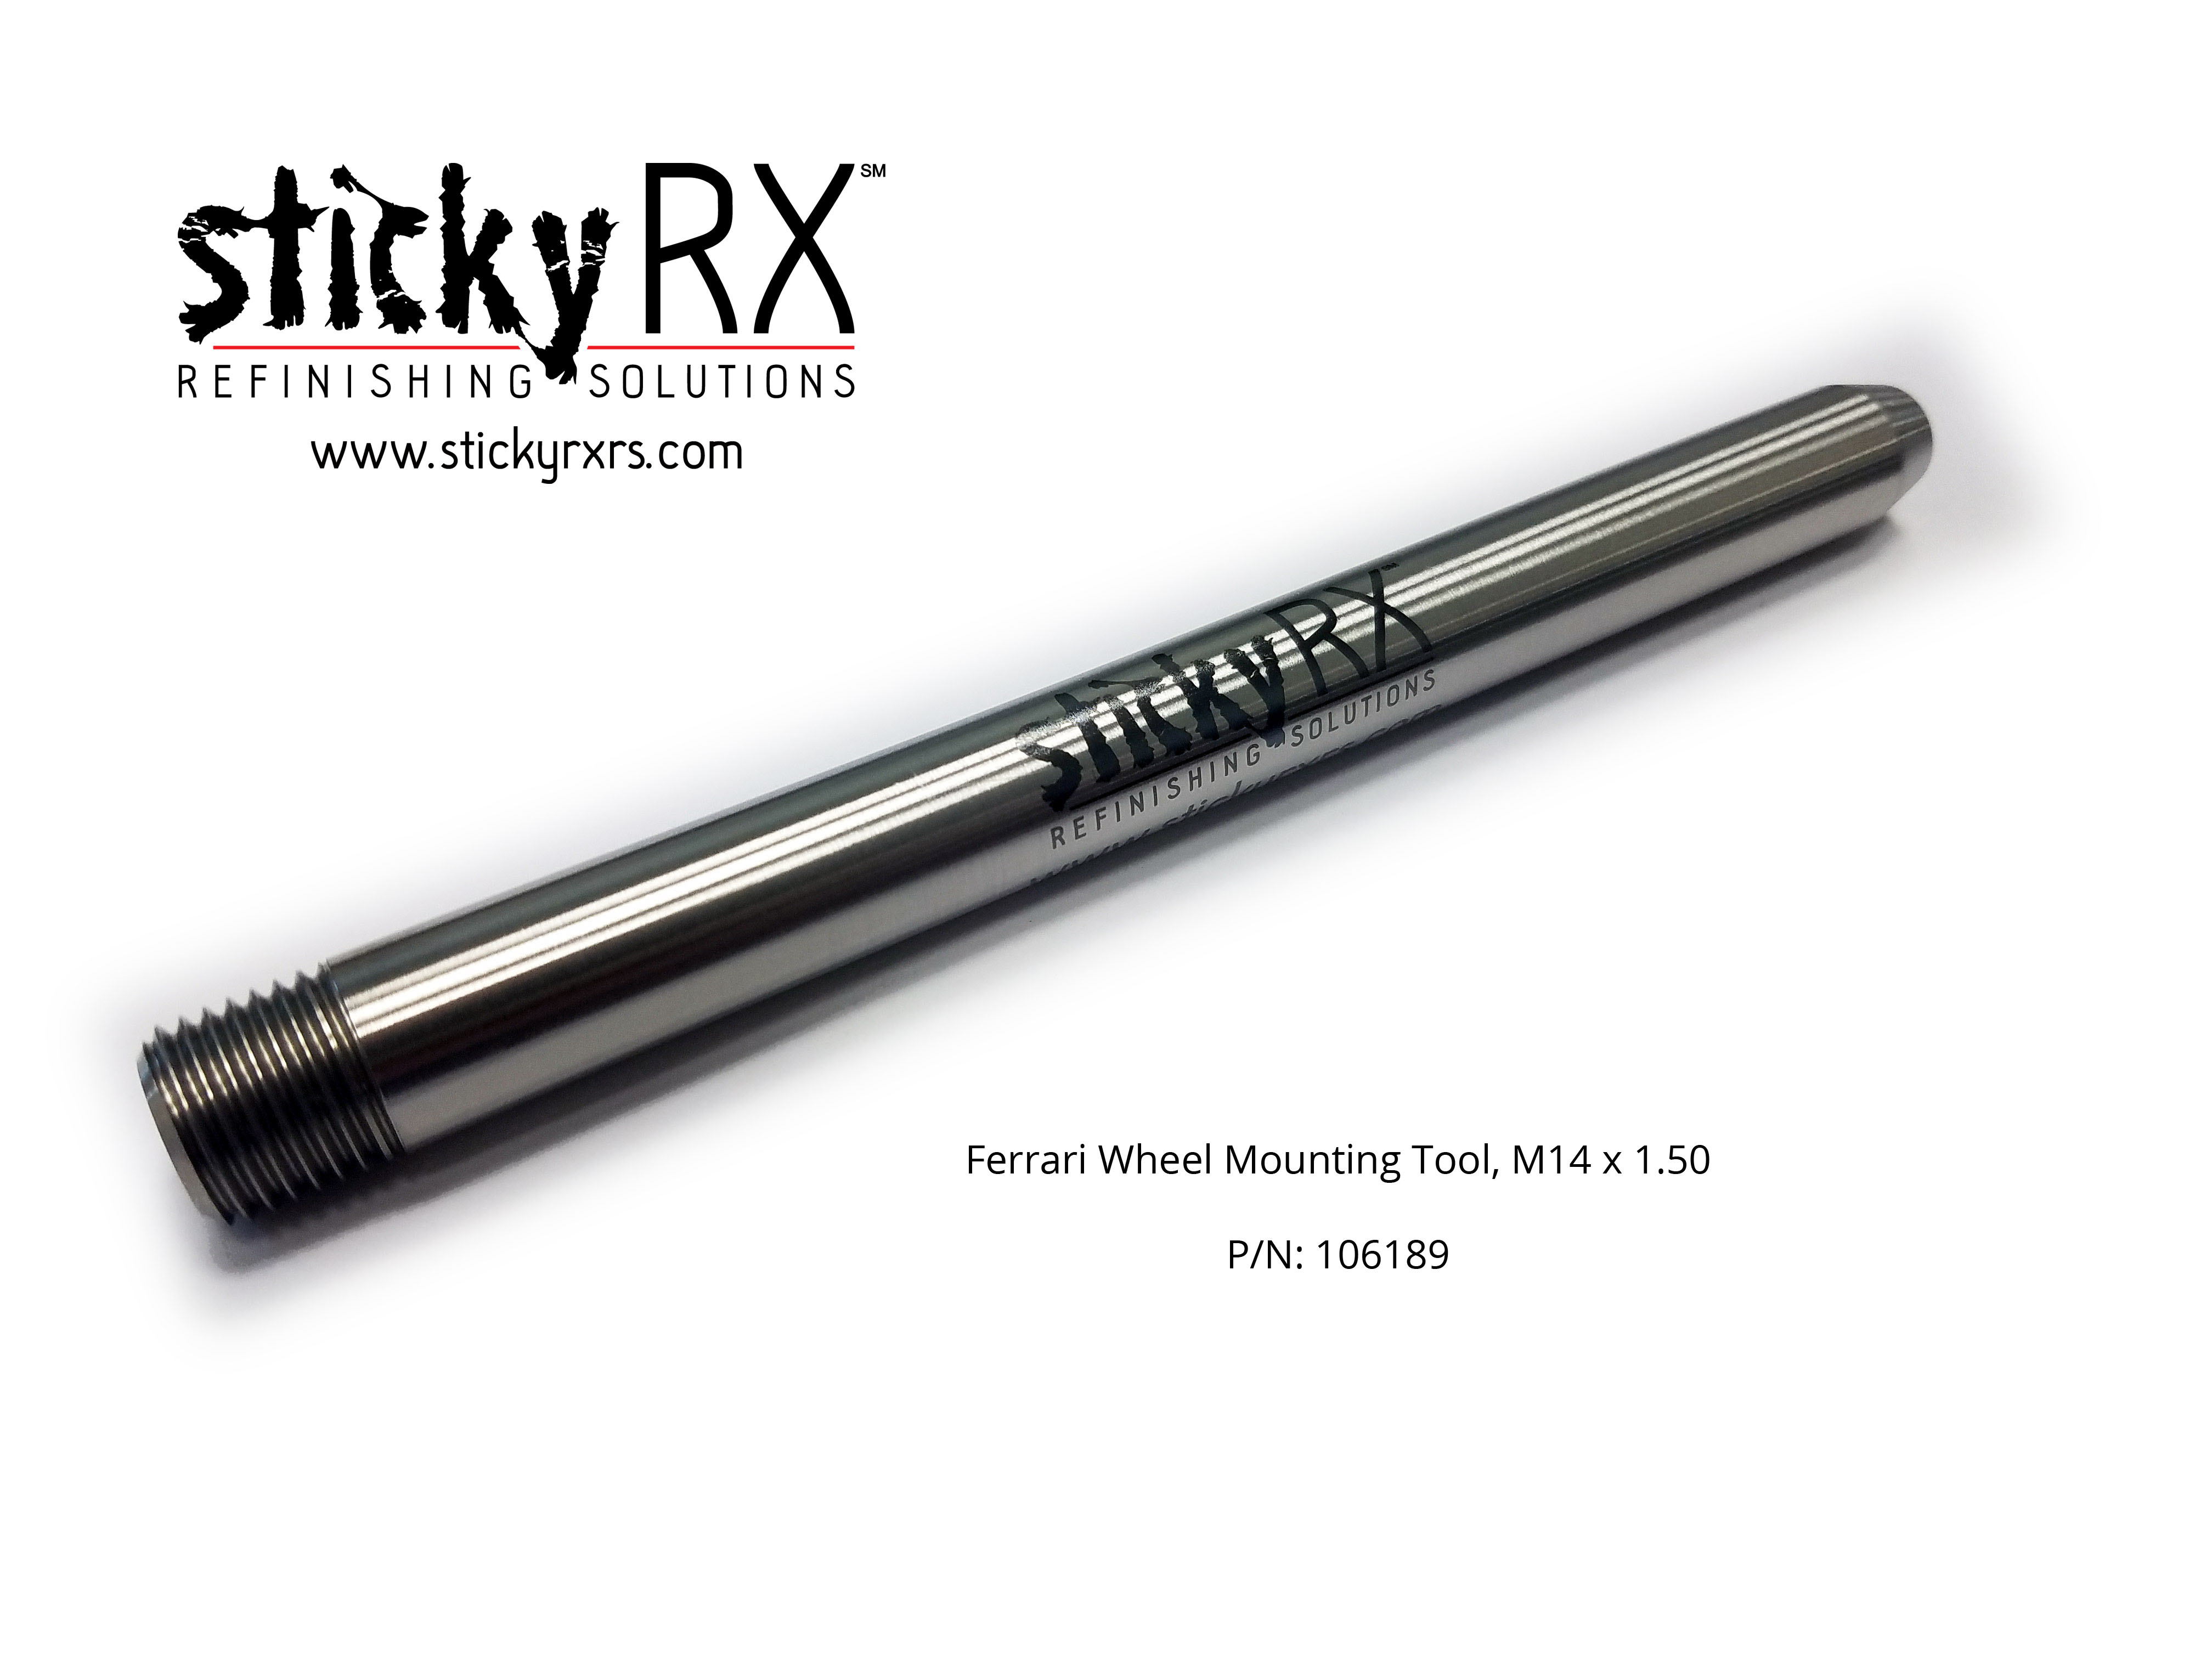 Sticky-RX-Refinishing-Solutions-Ferrari-Wheel-Mounting-Tool-01.jpg